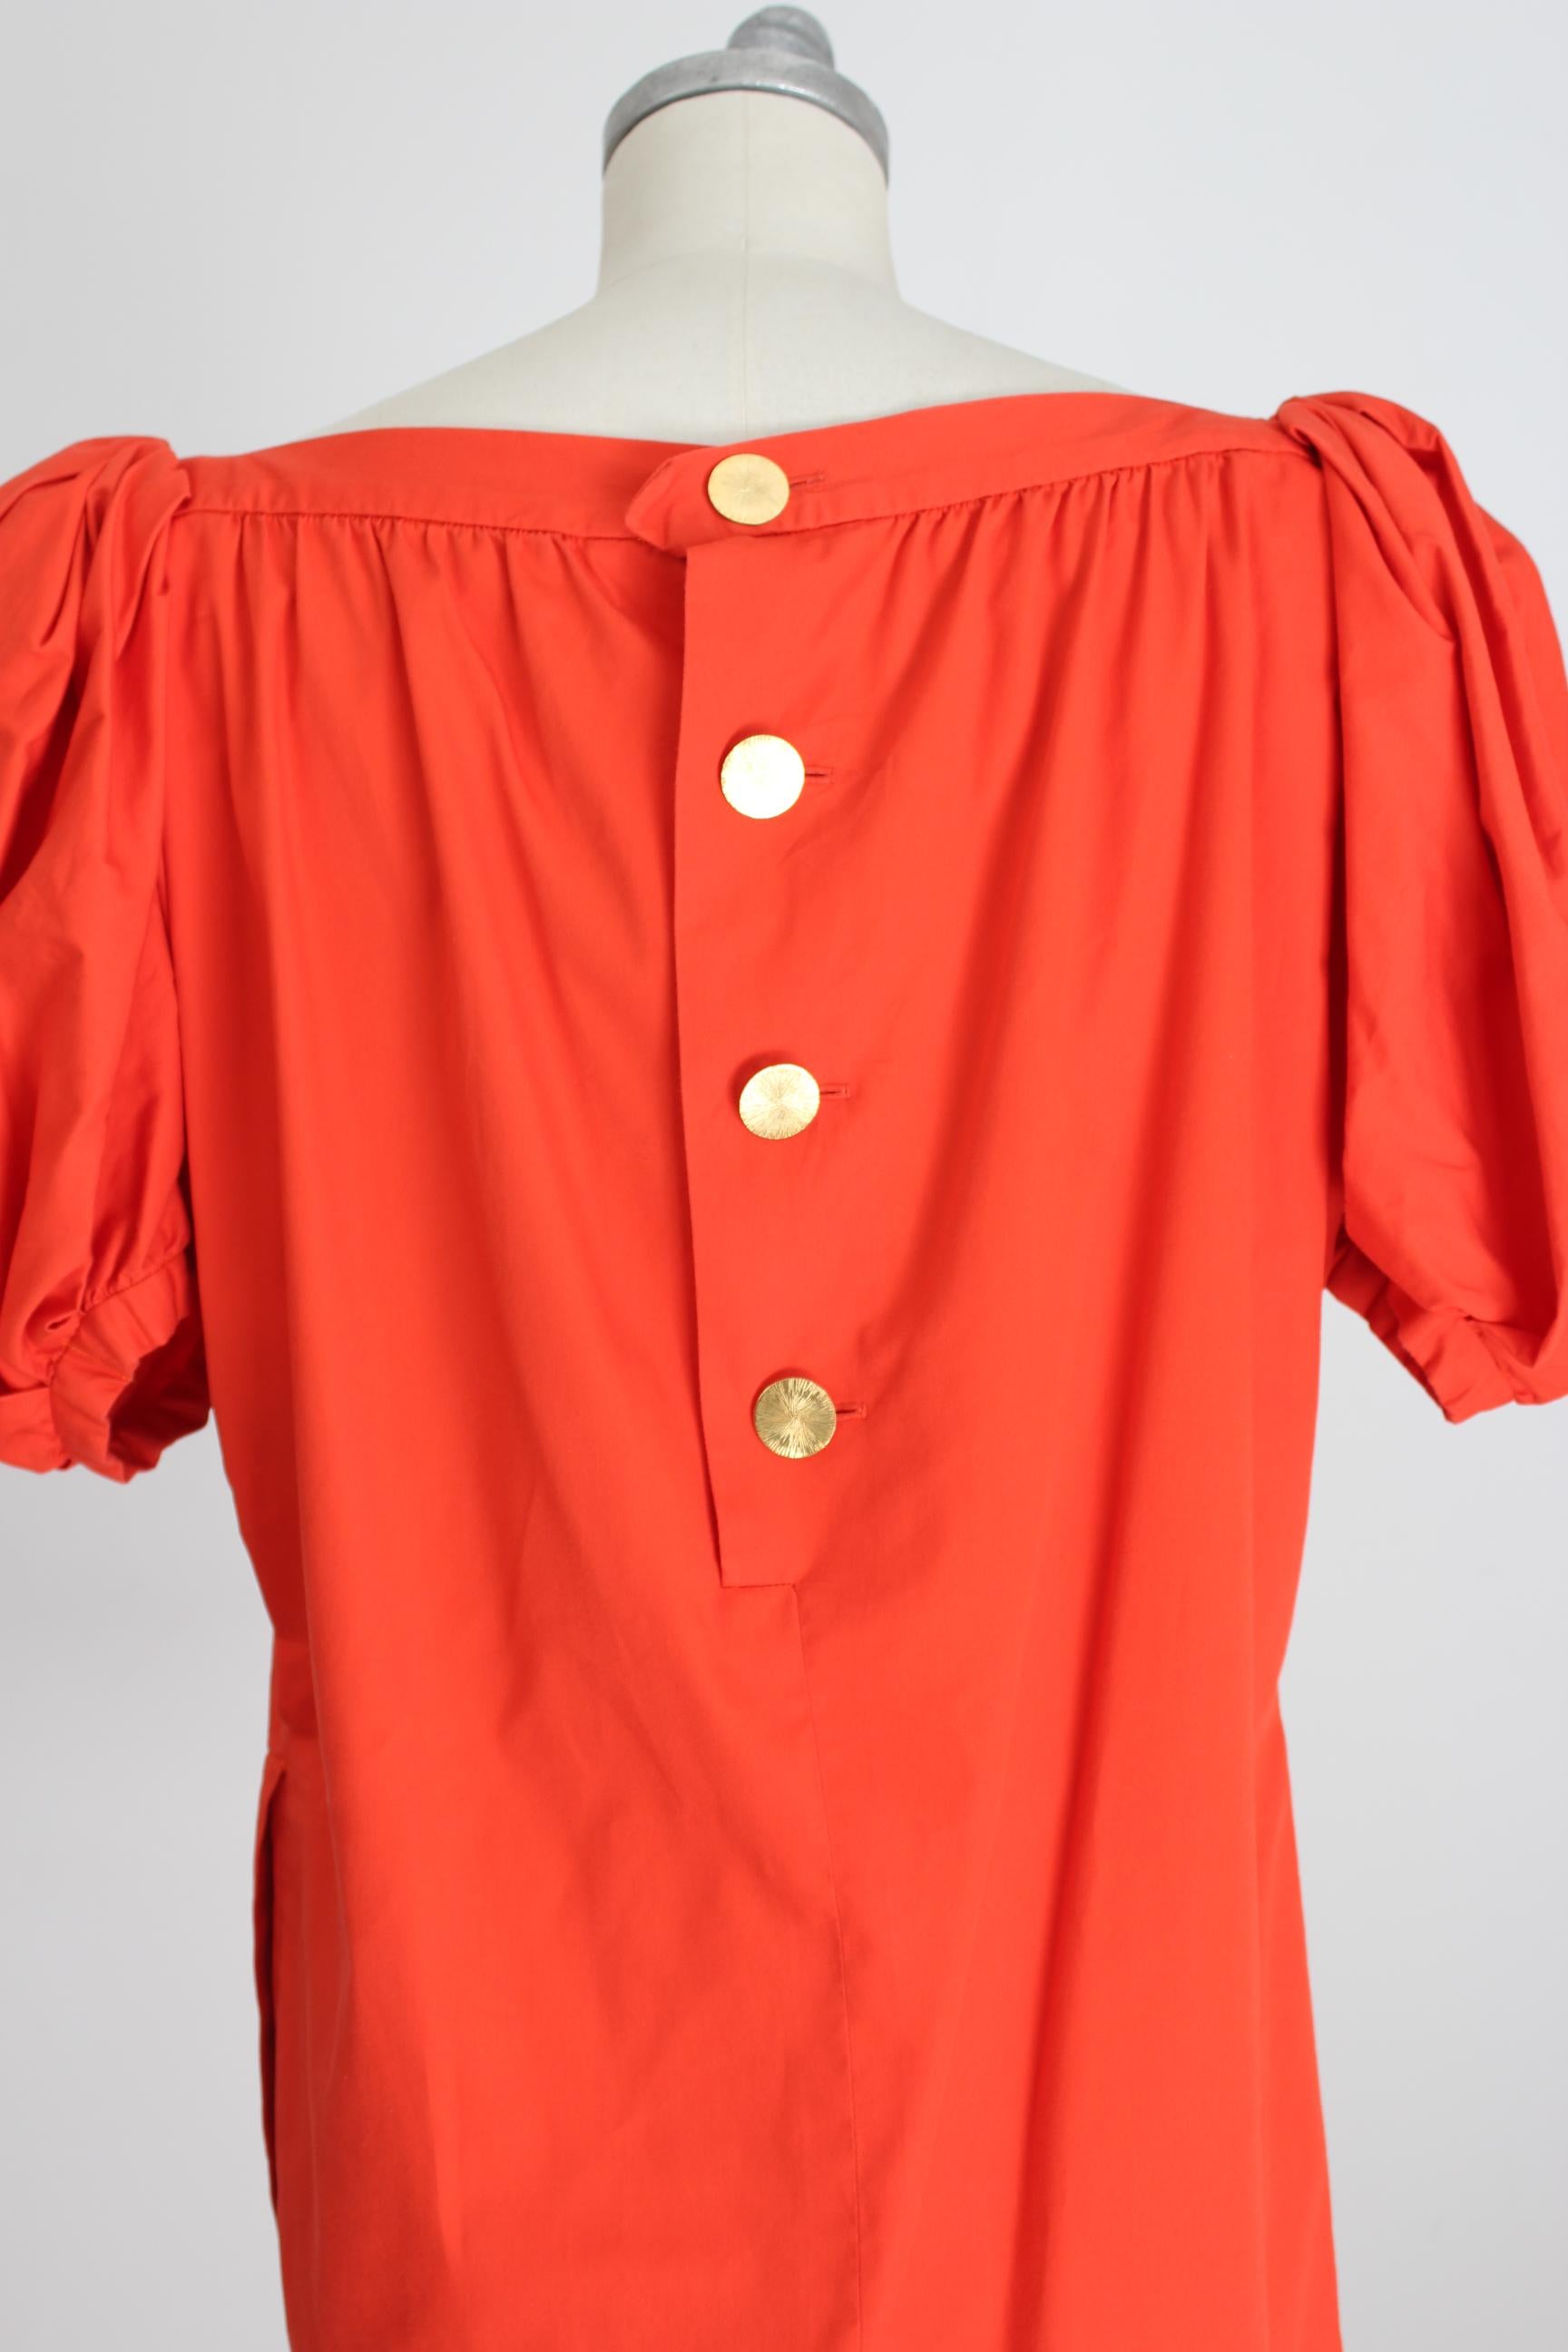 Yves Saint Laurent Rive Gauche Red Cotton Straight Cocktail Dress 1980s 1